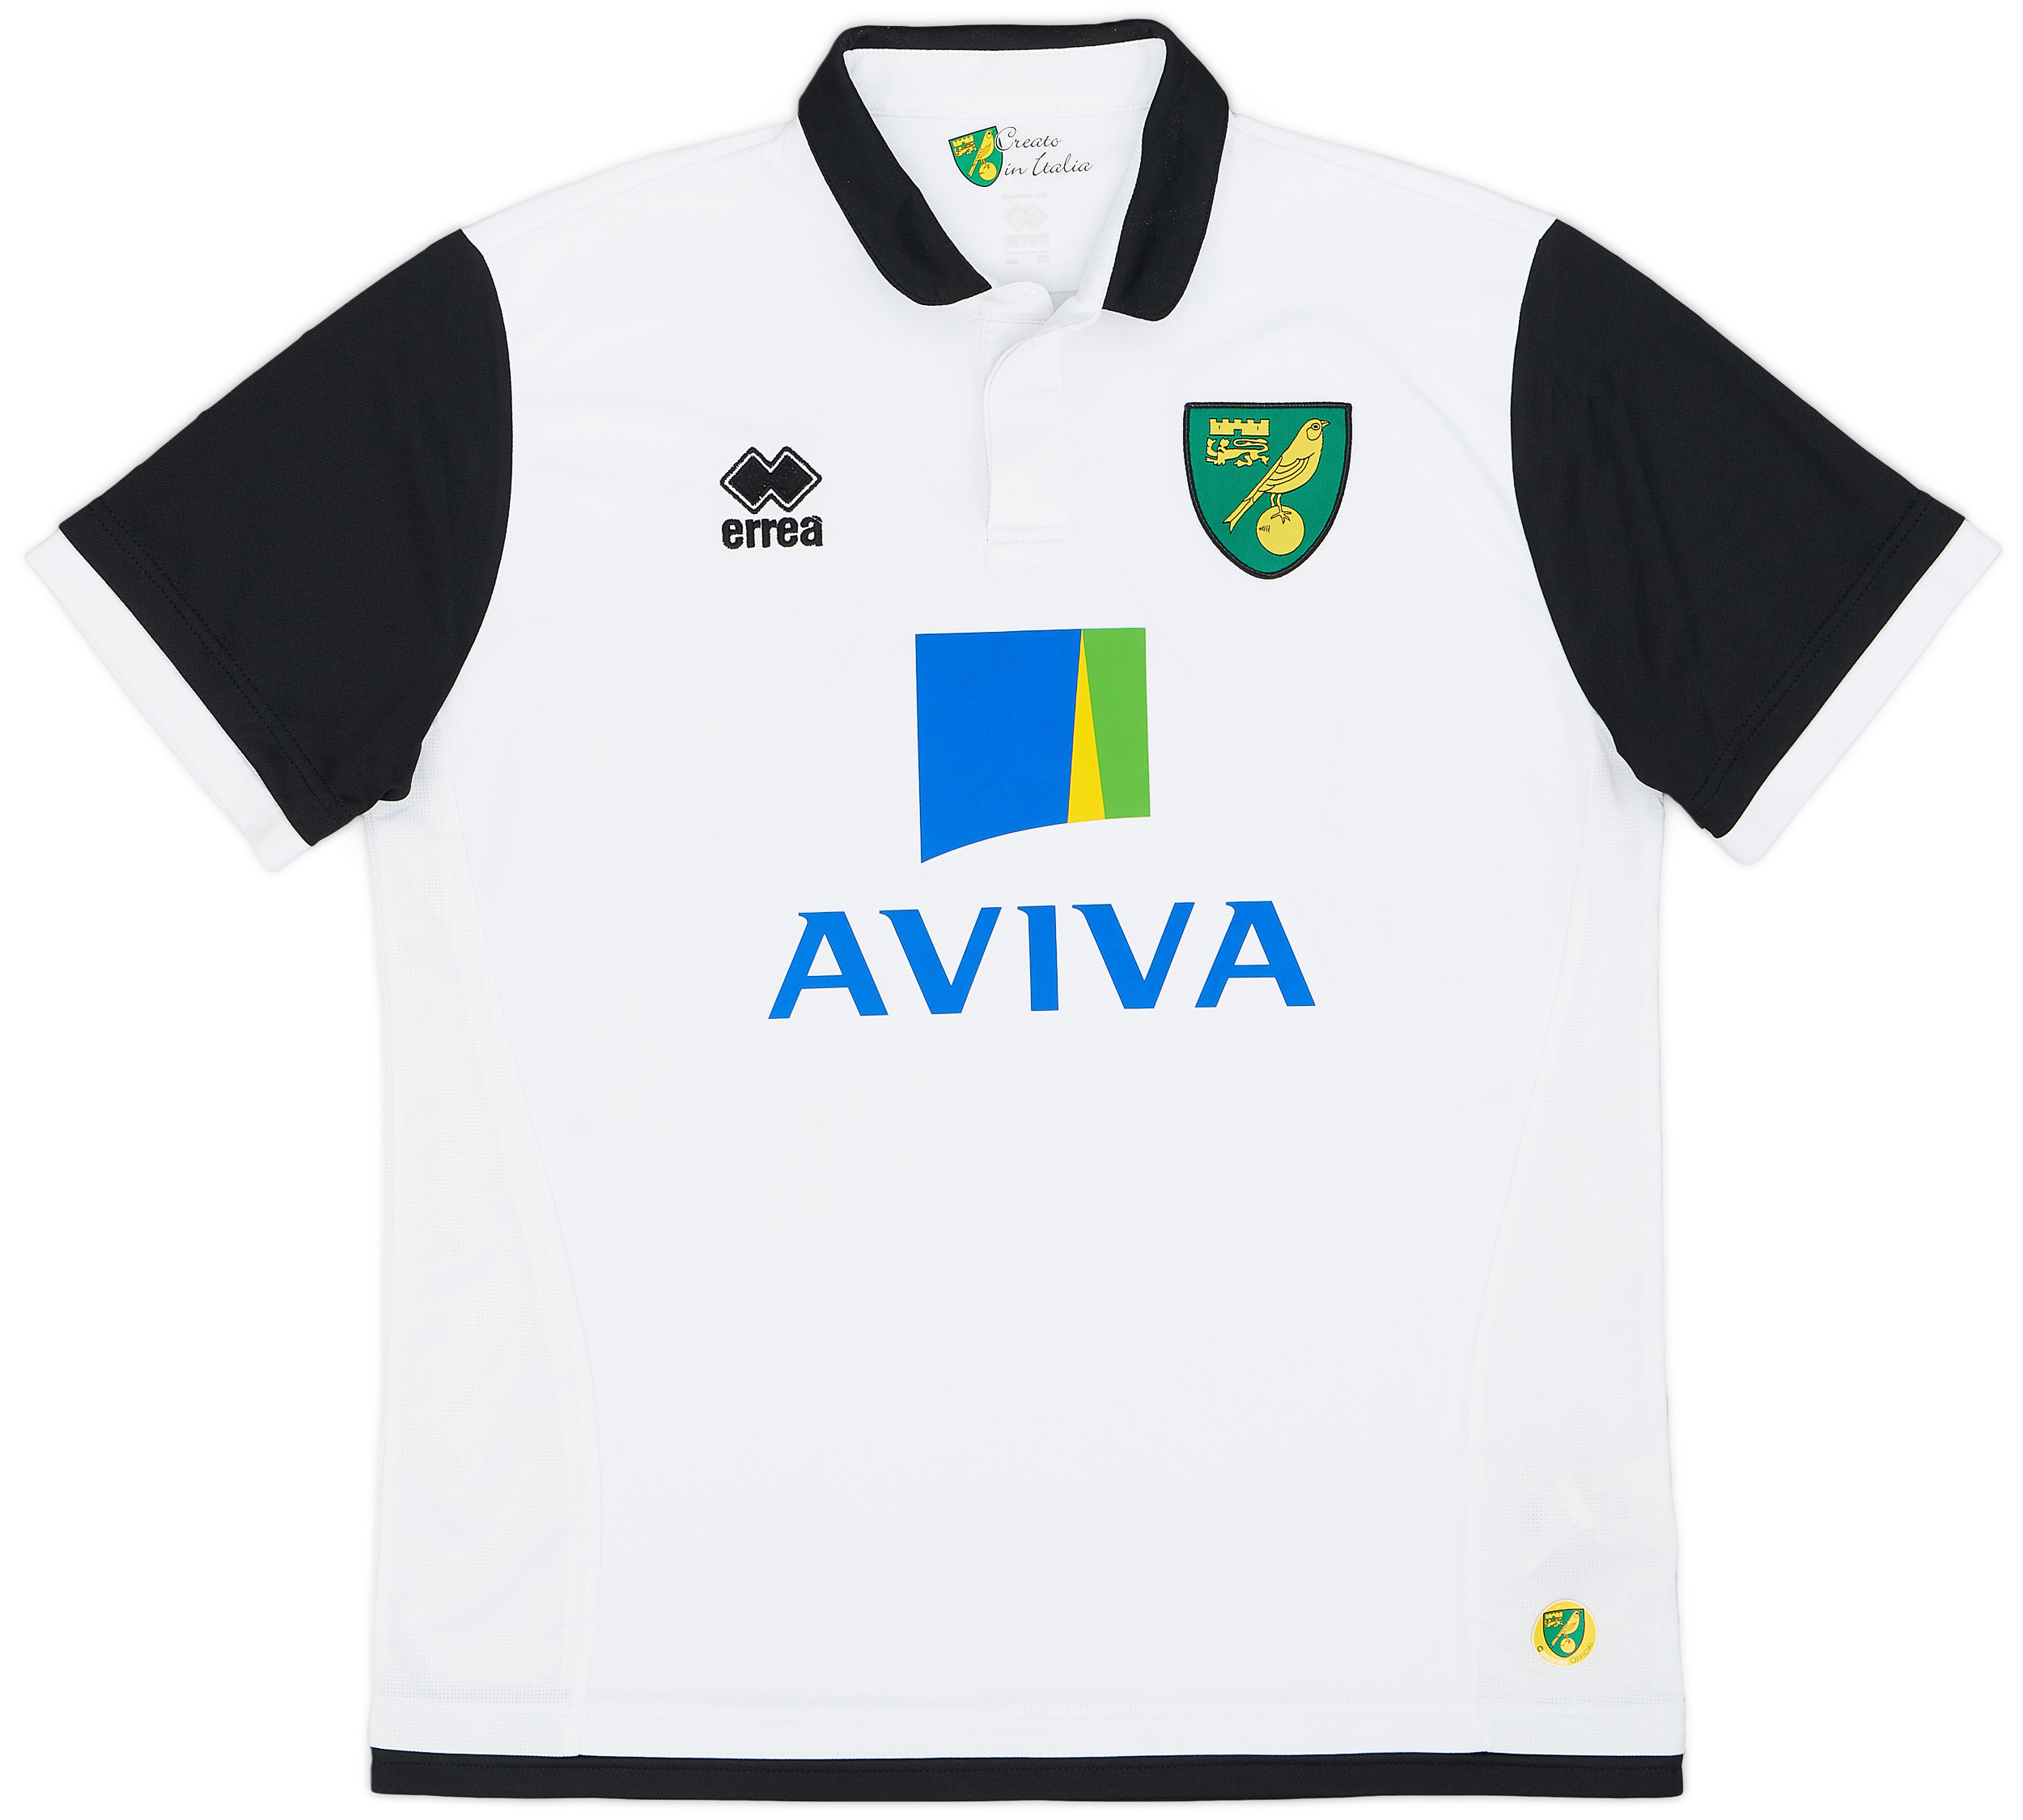 2013-14 Norwich City Away Shirt - 8/10 - ()